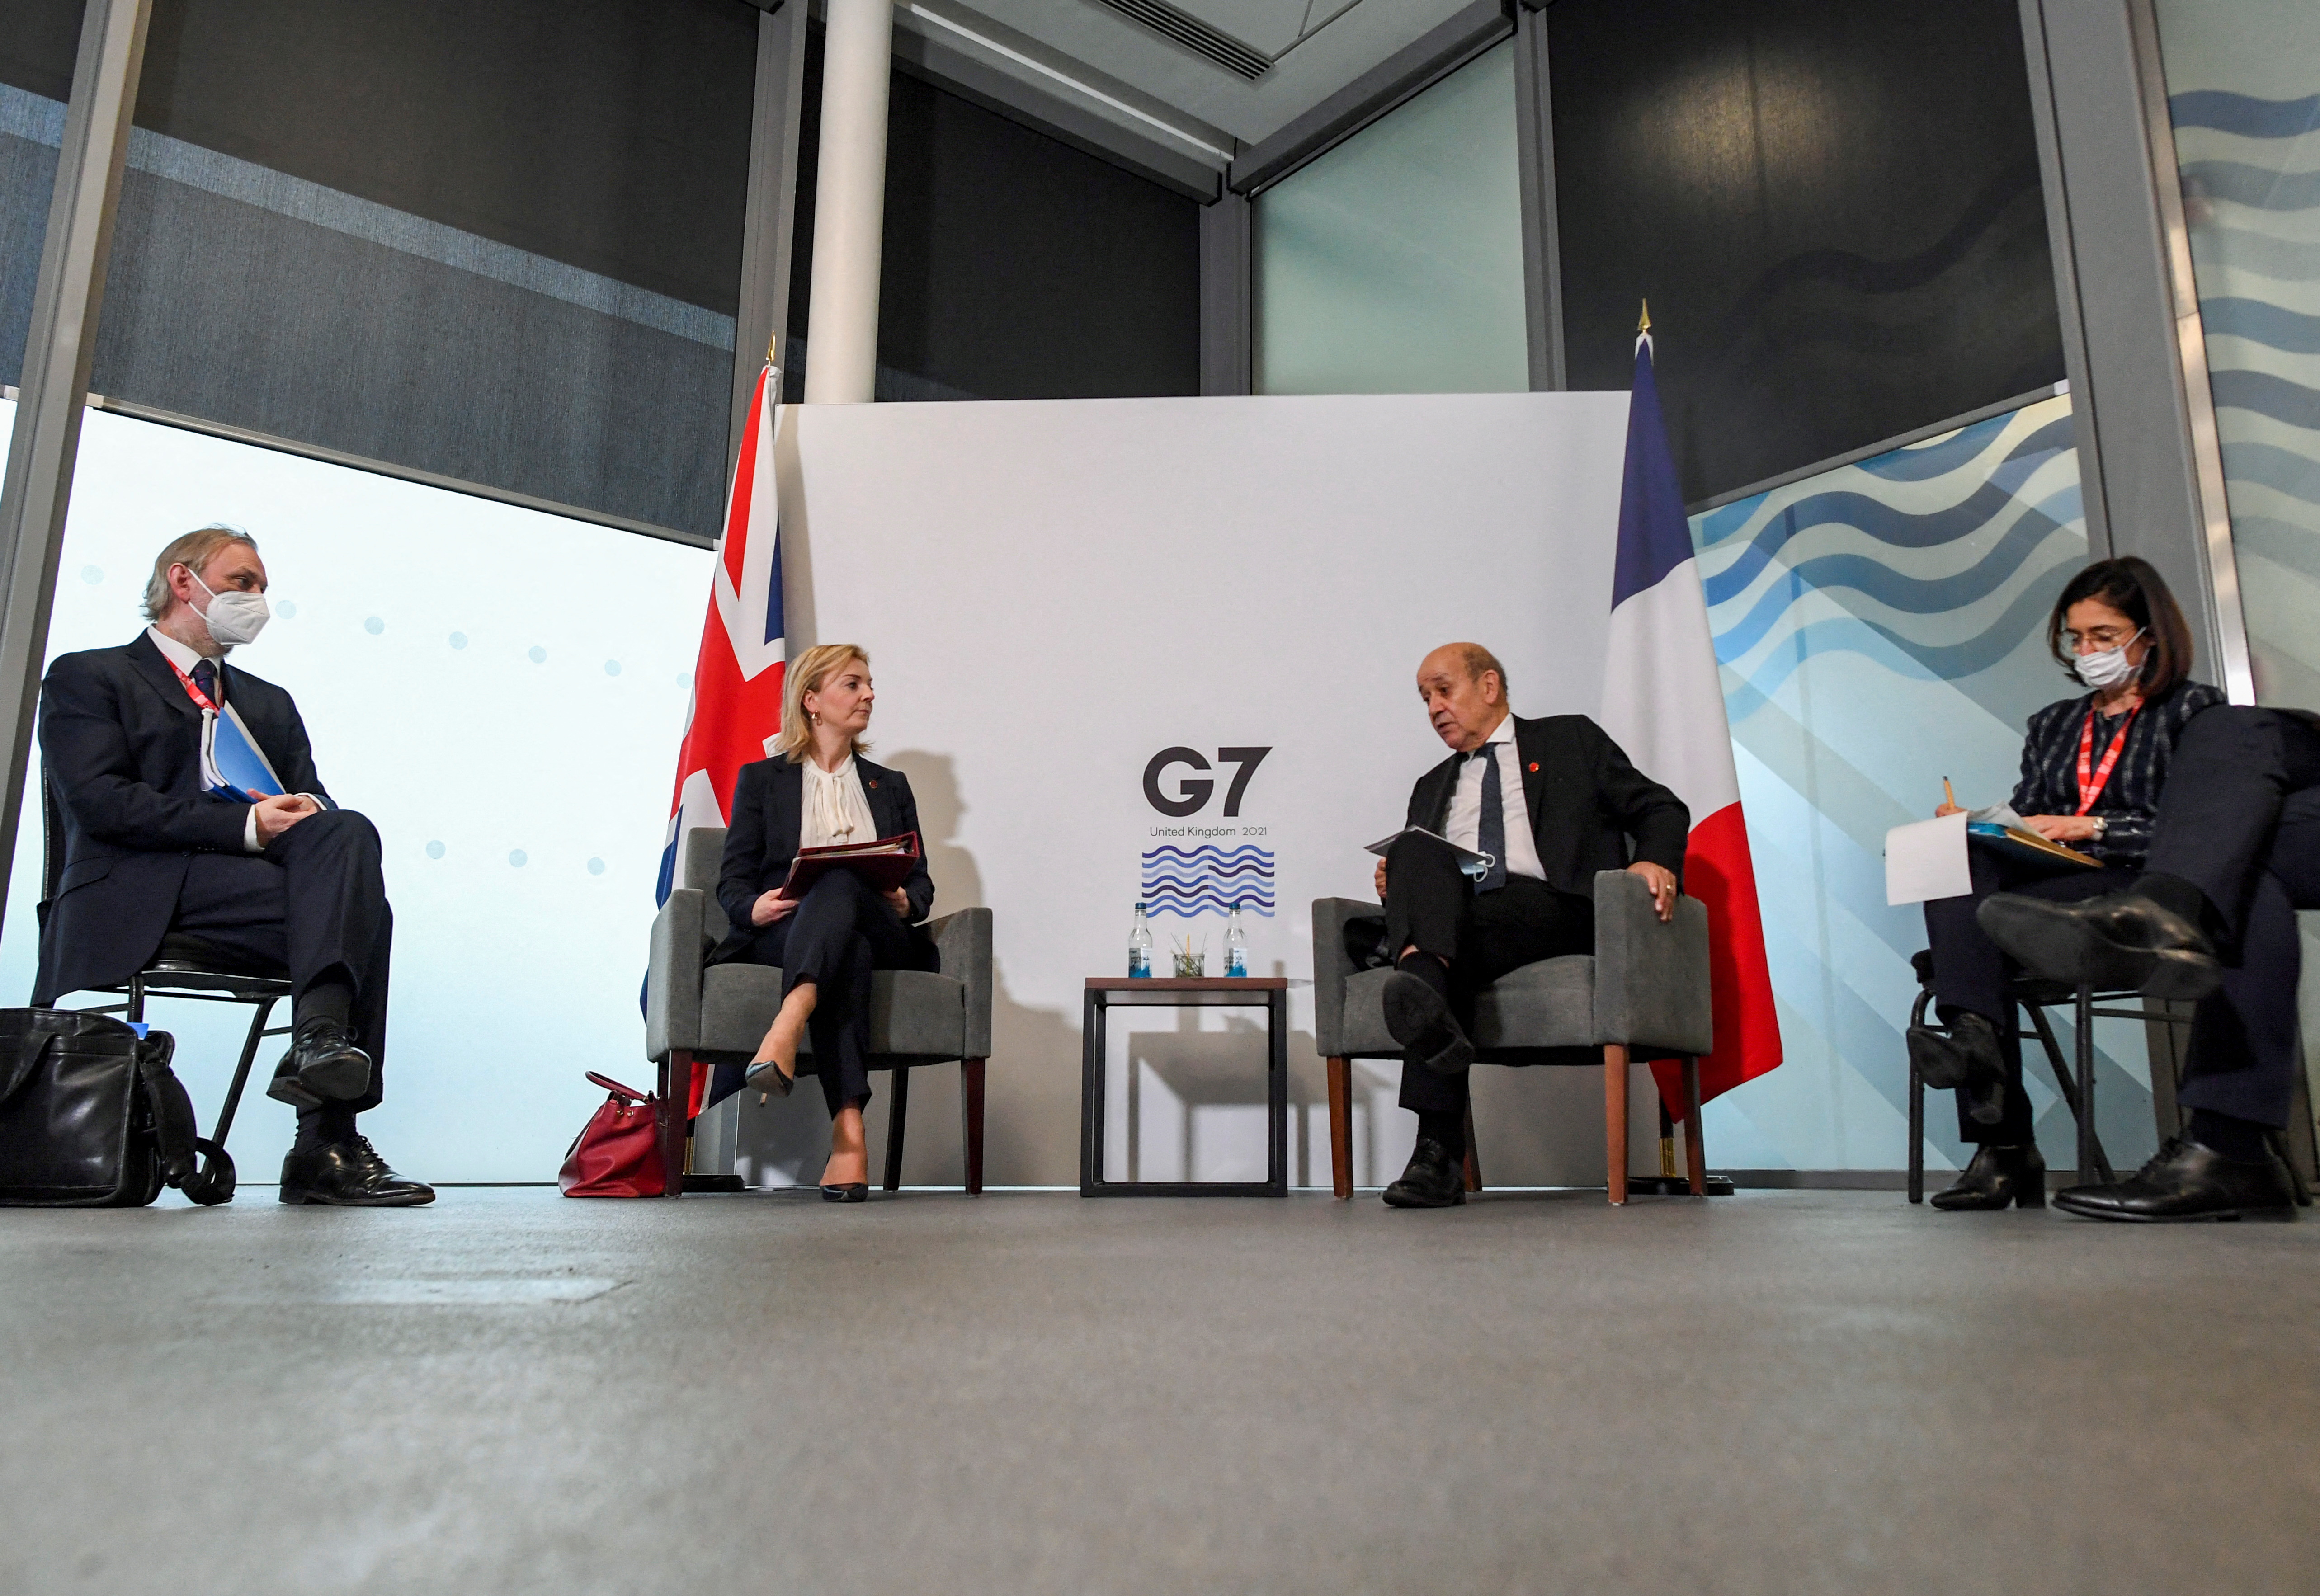 G7 summit in Liverpool